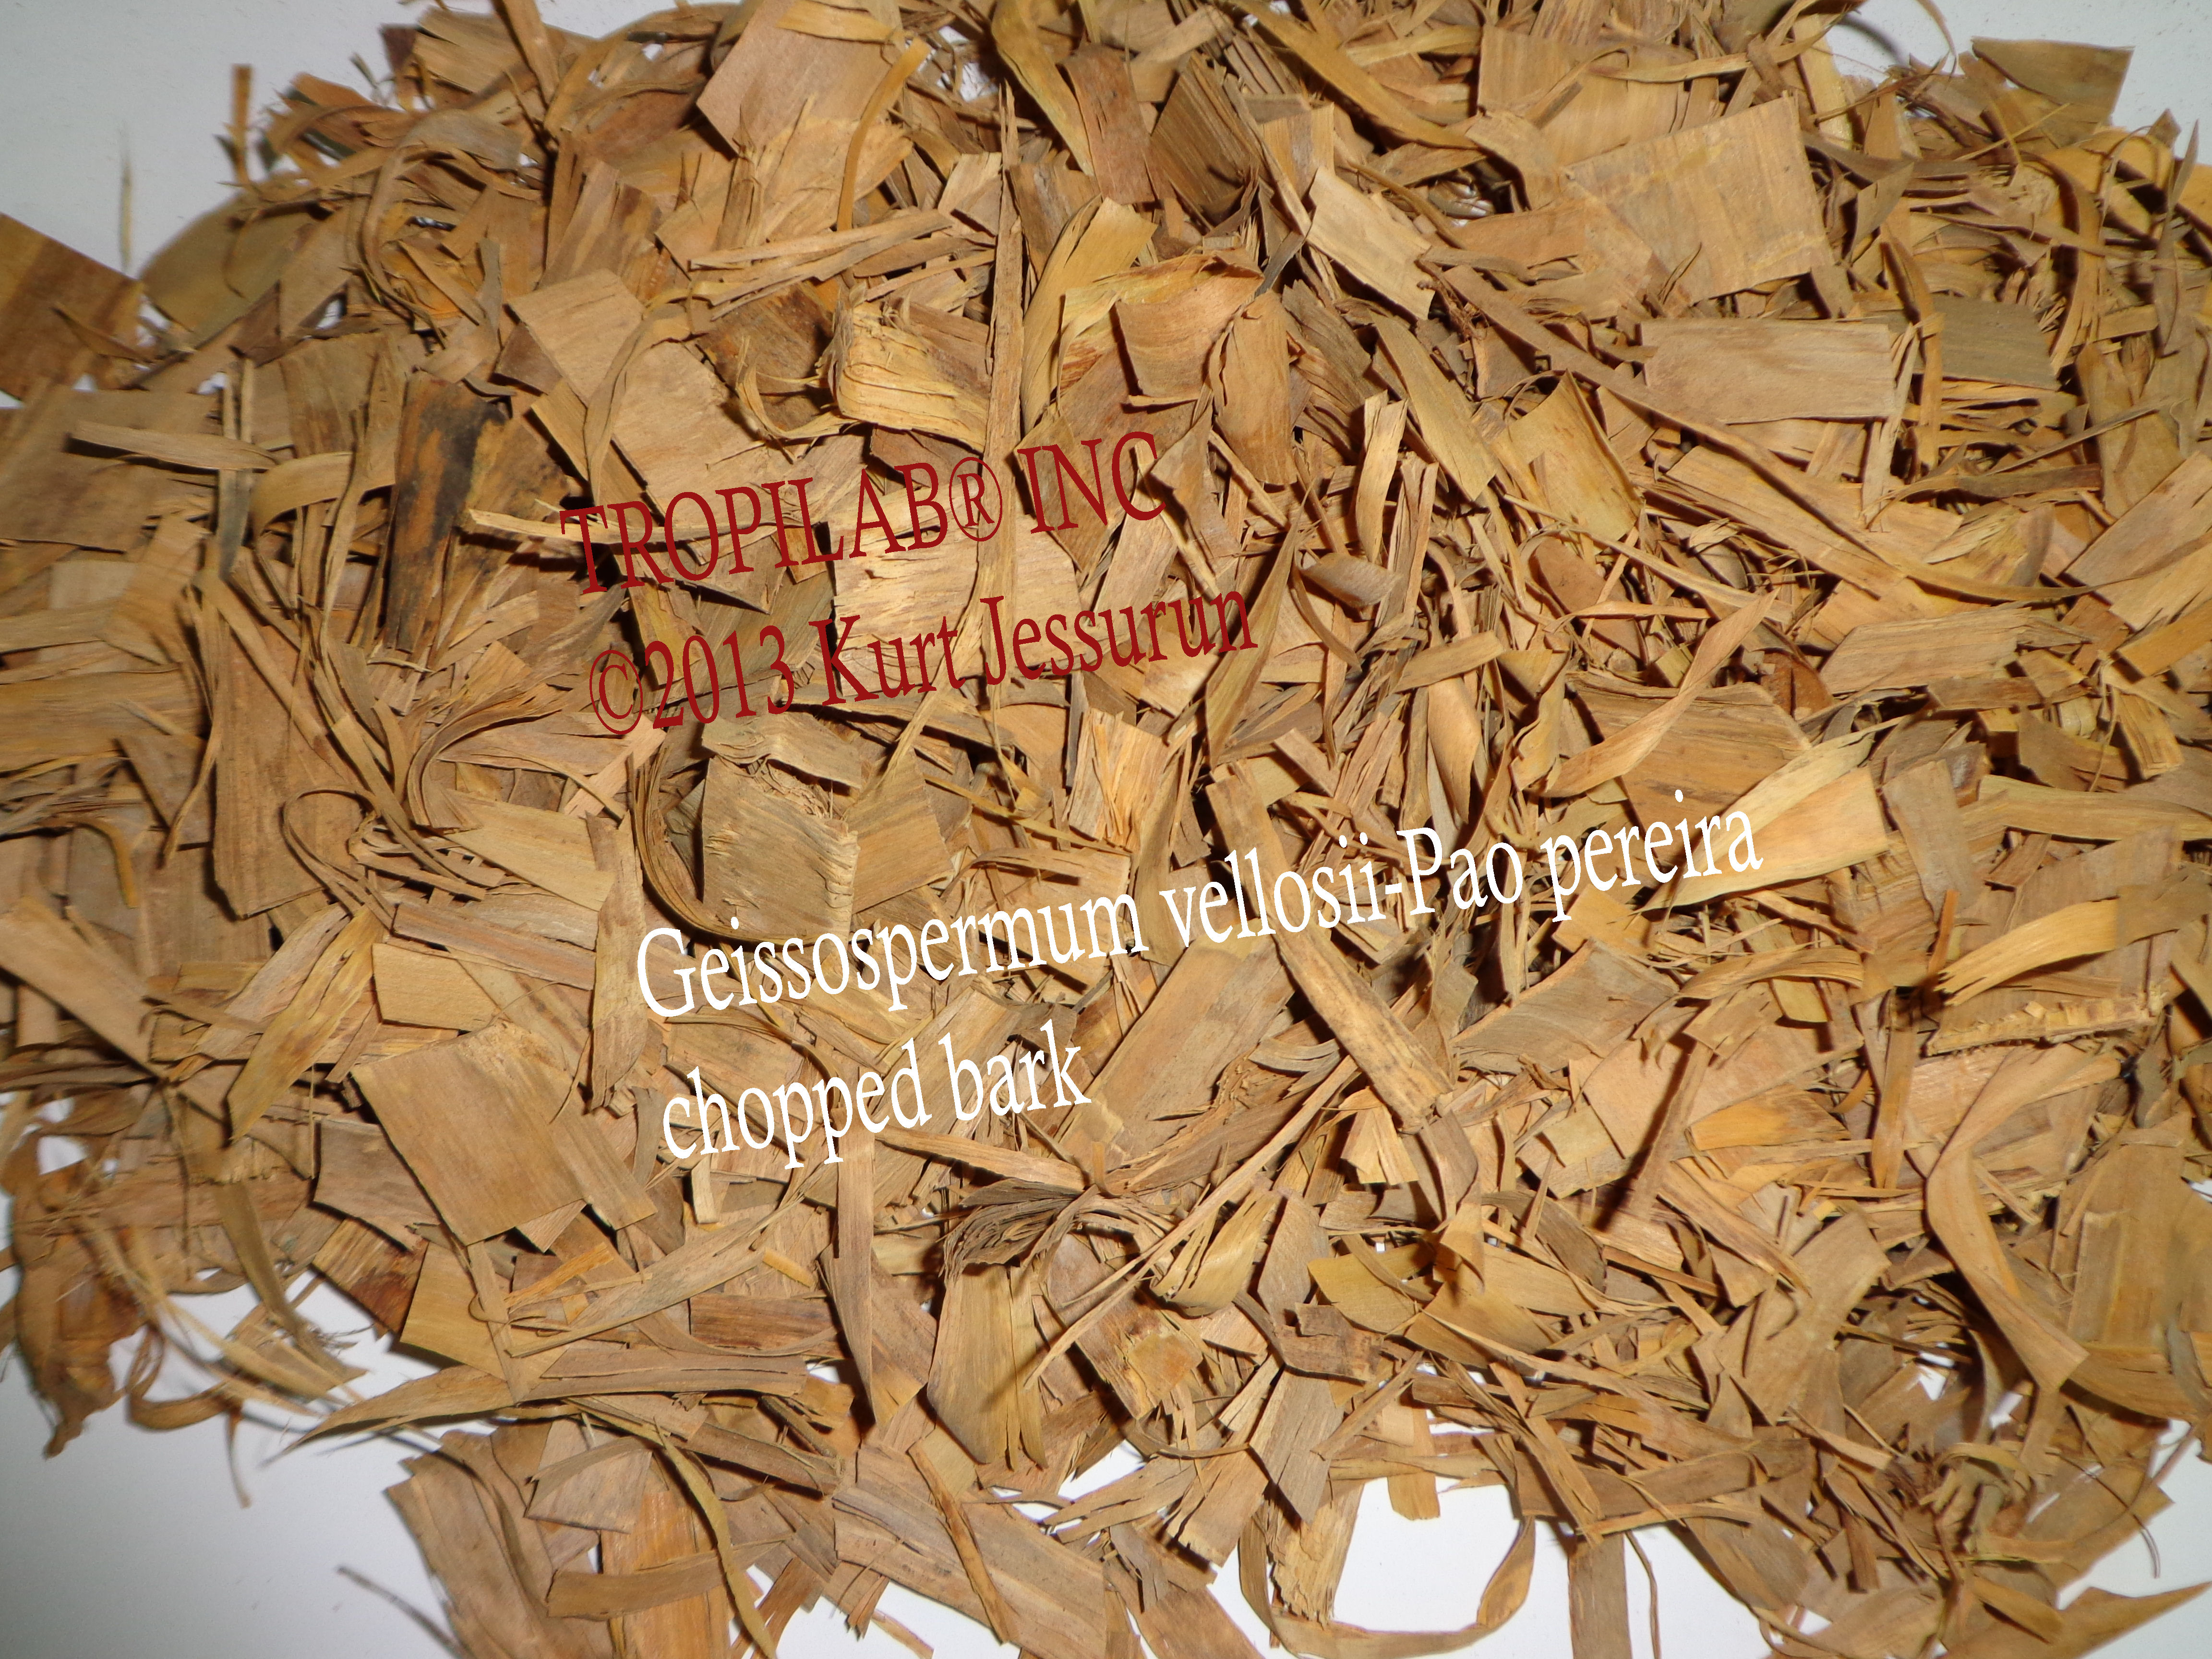 Geissospermum vellosii - Pao pereira chopped bark (Tropilab)